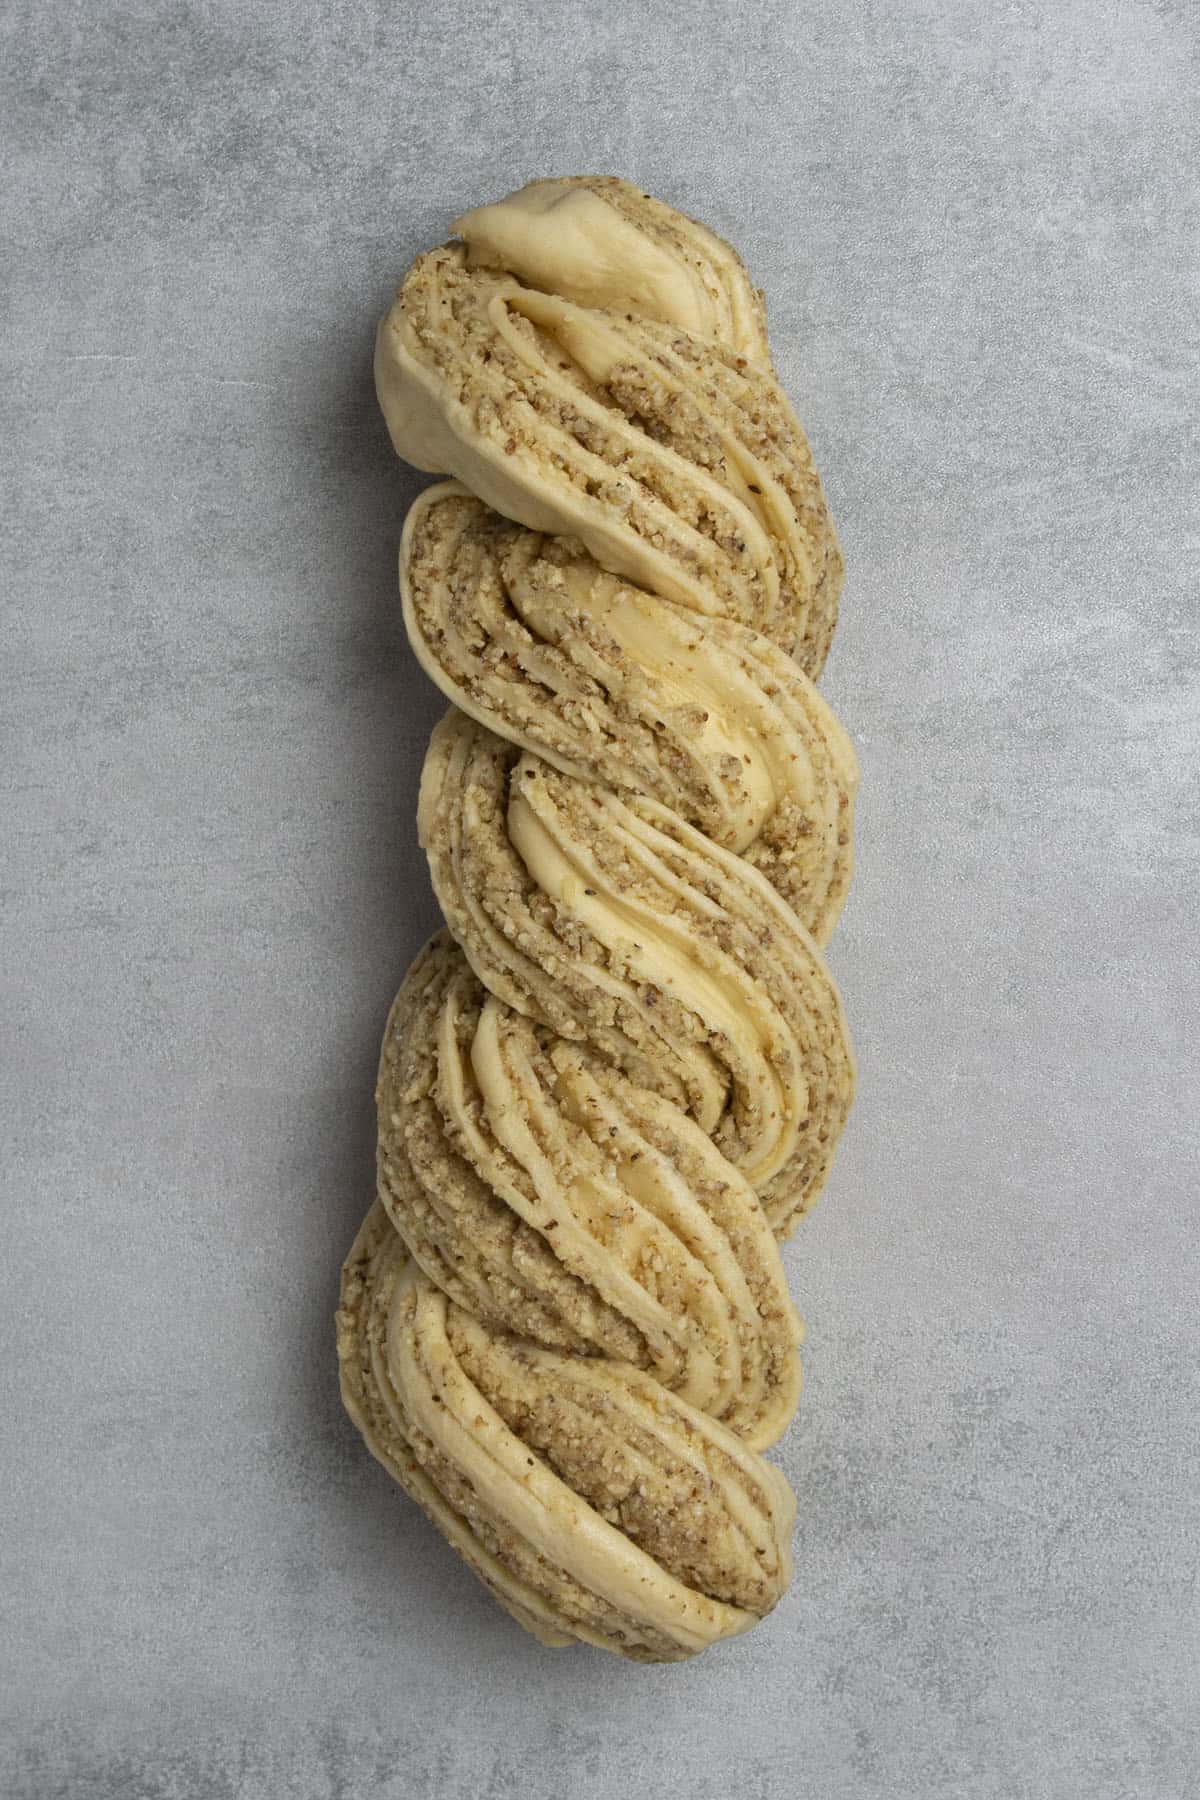 Walnut babka dough